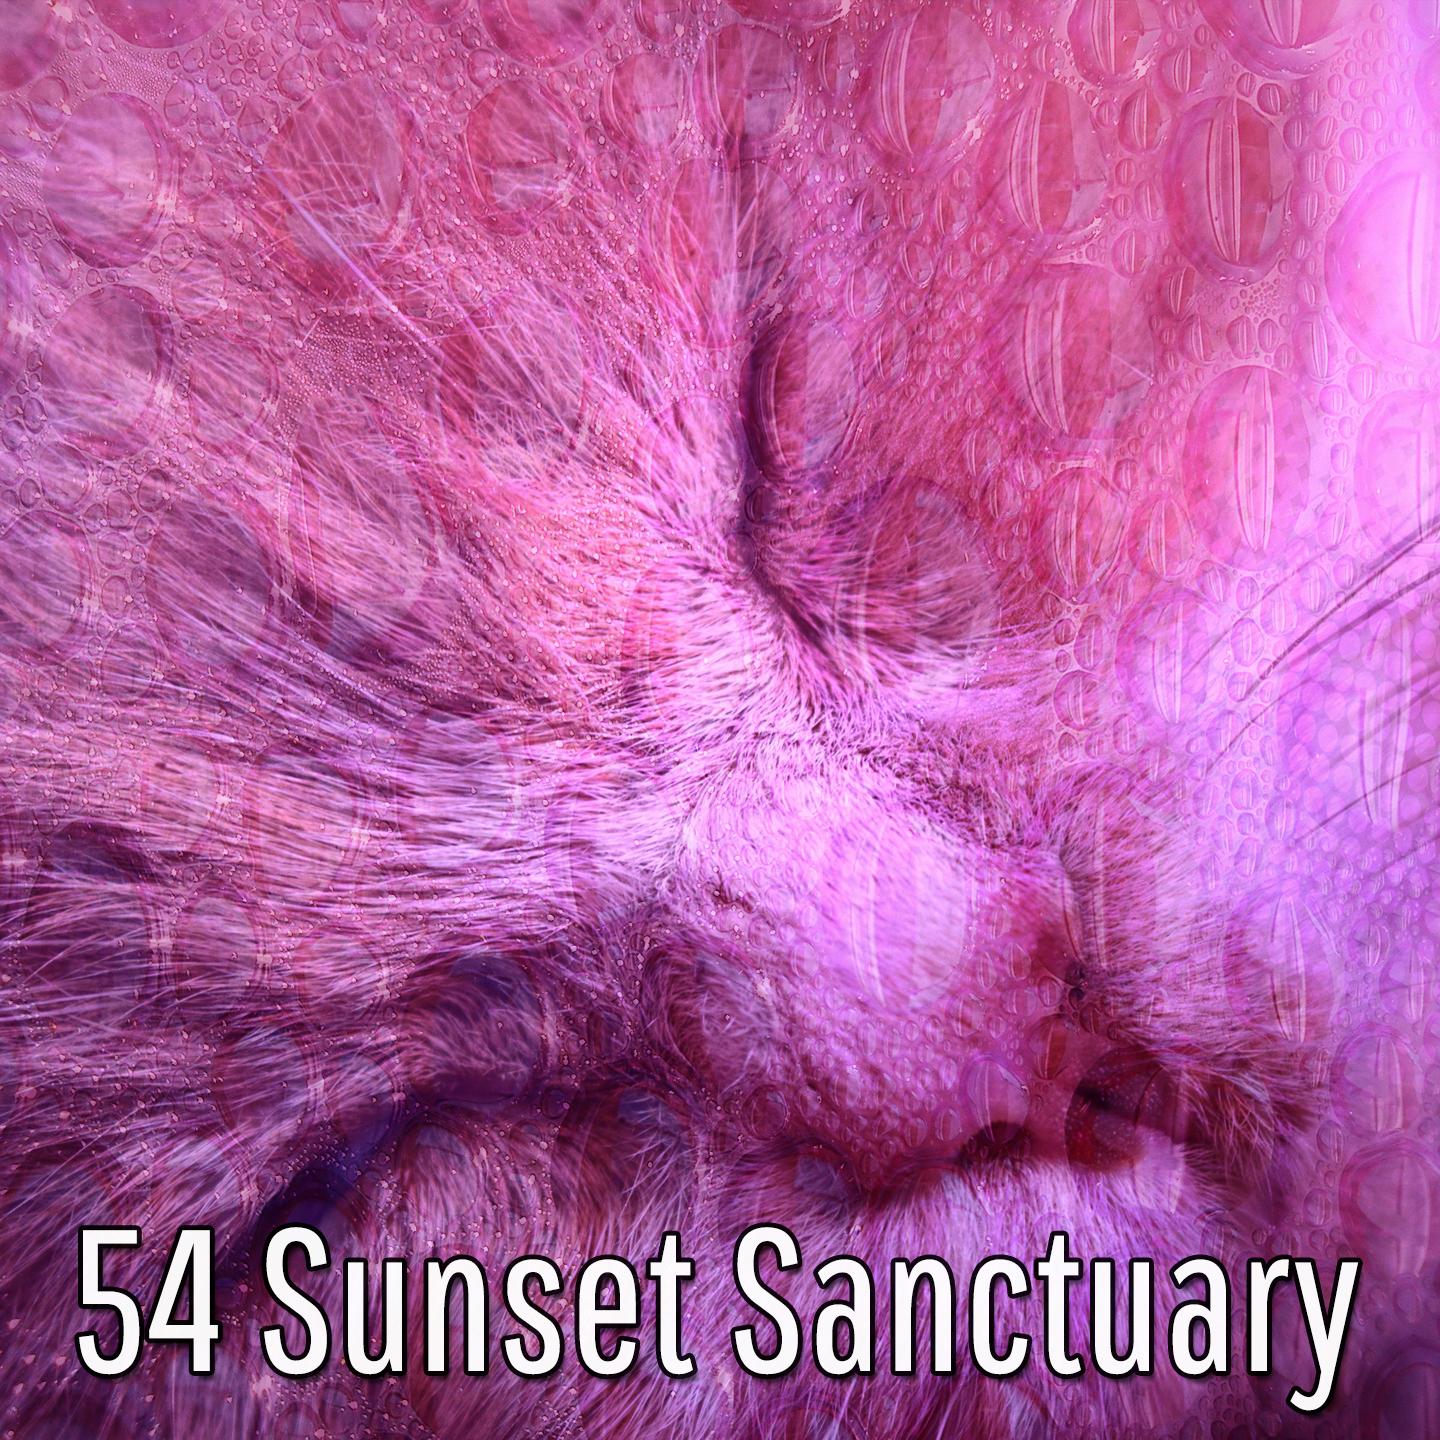 54 Sunset Sanctuary